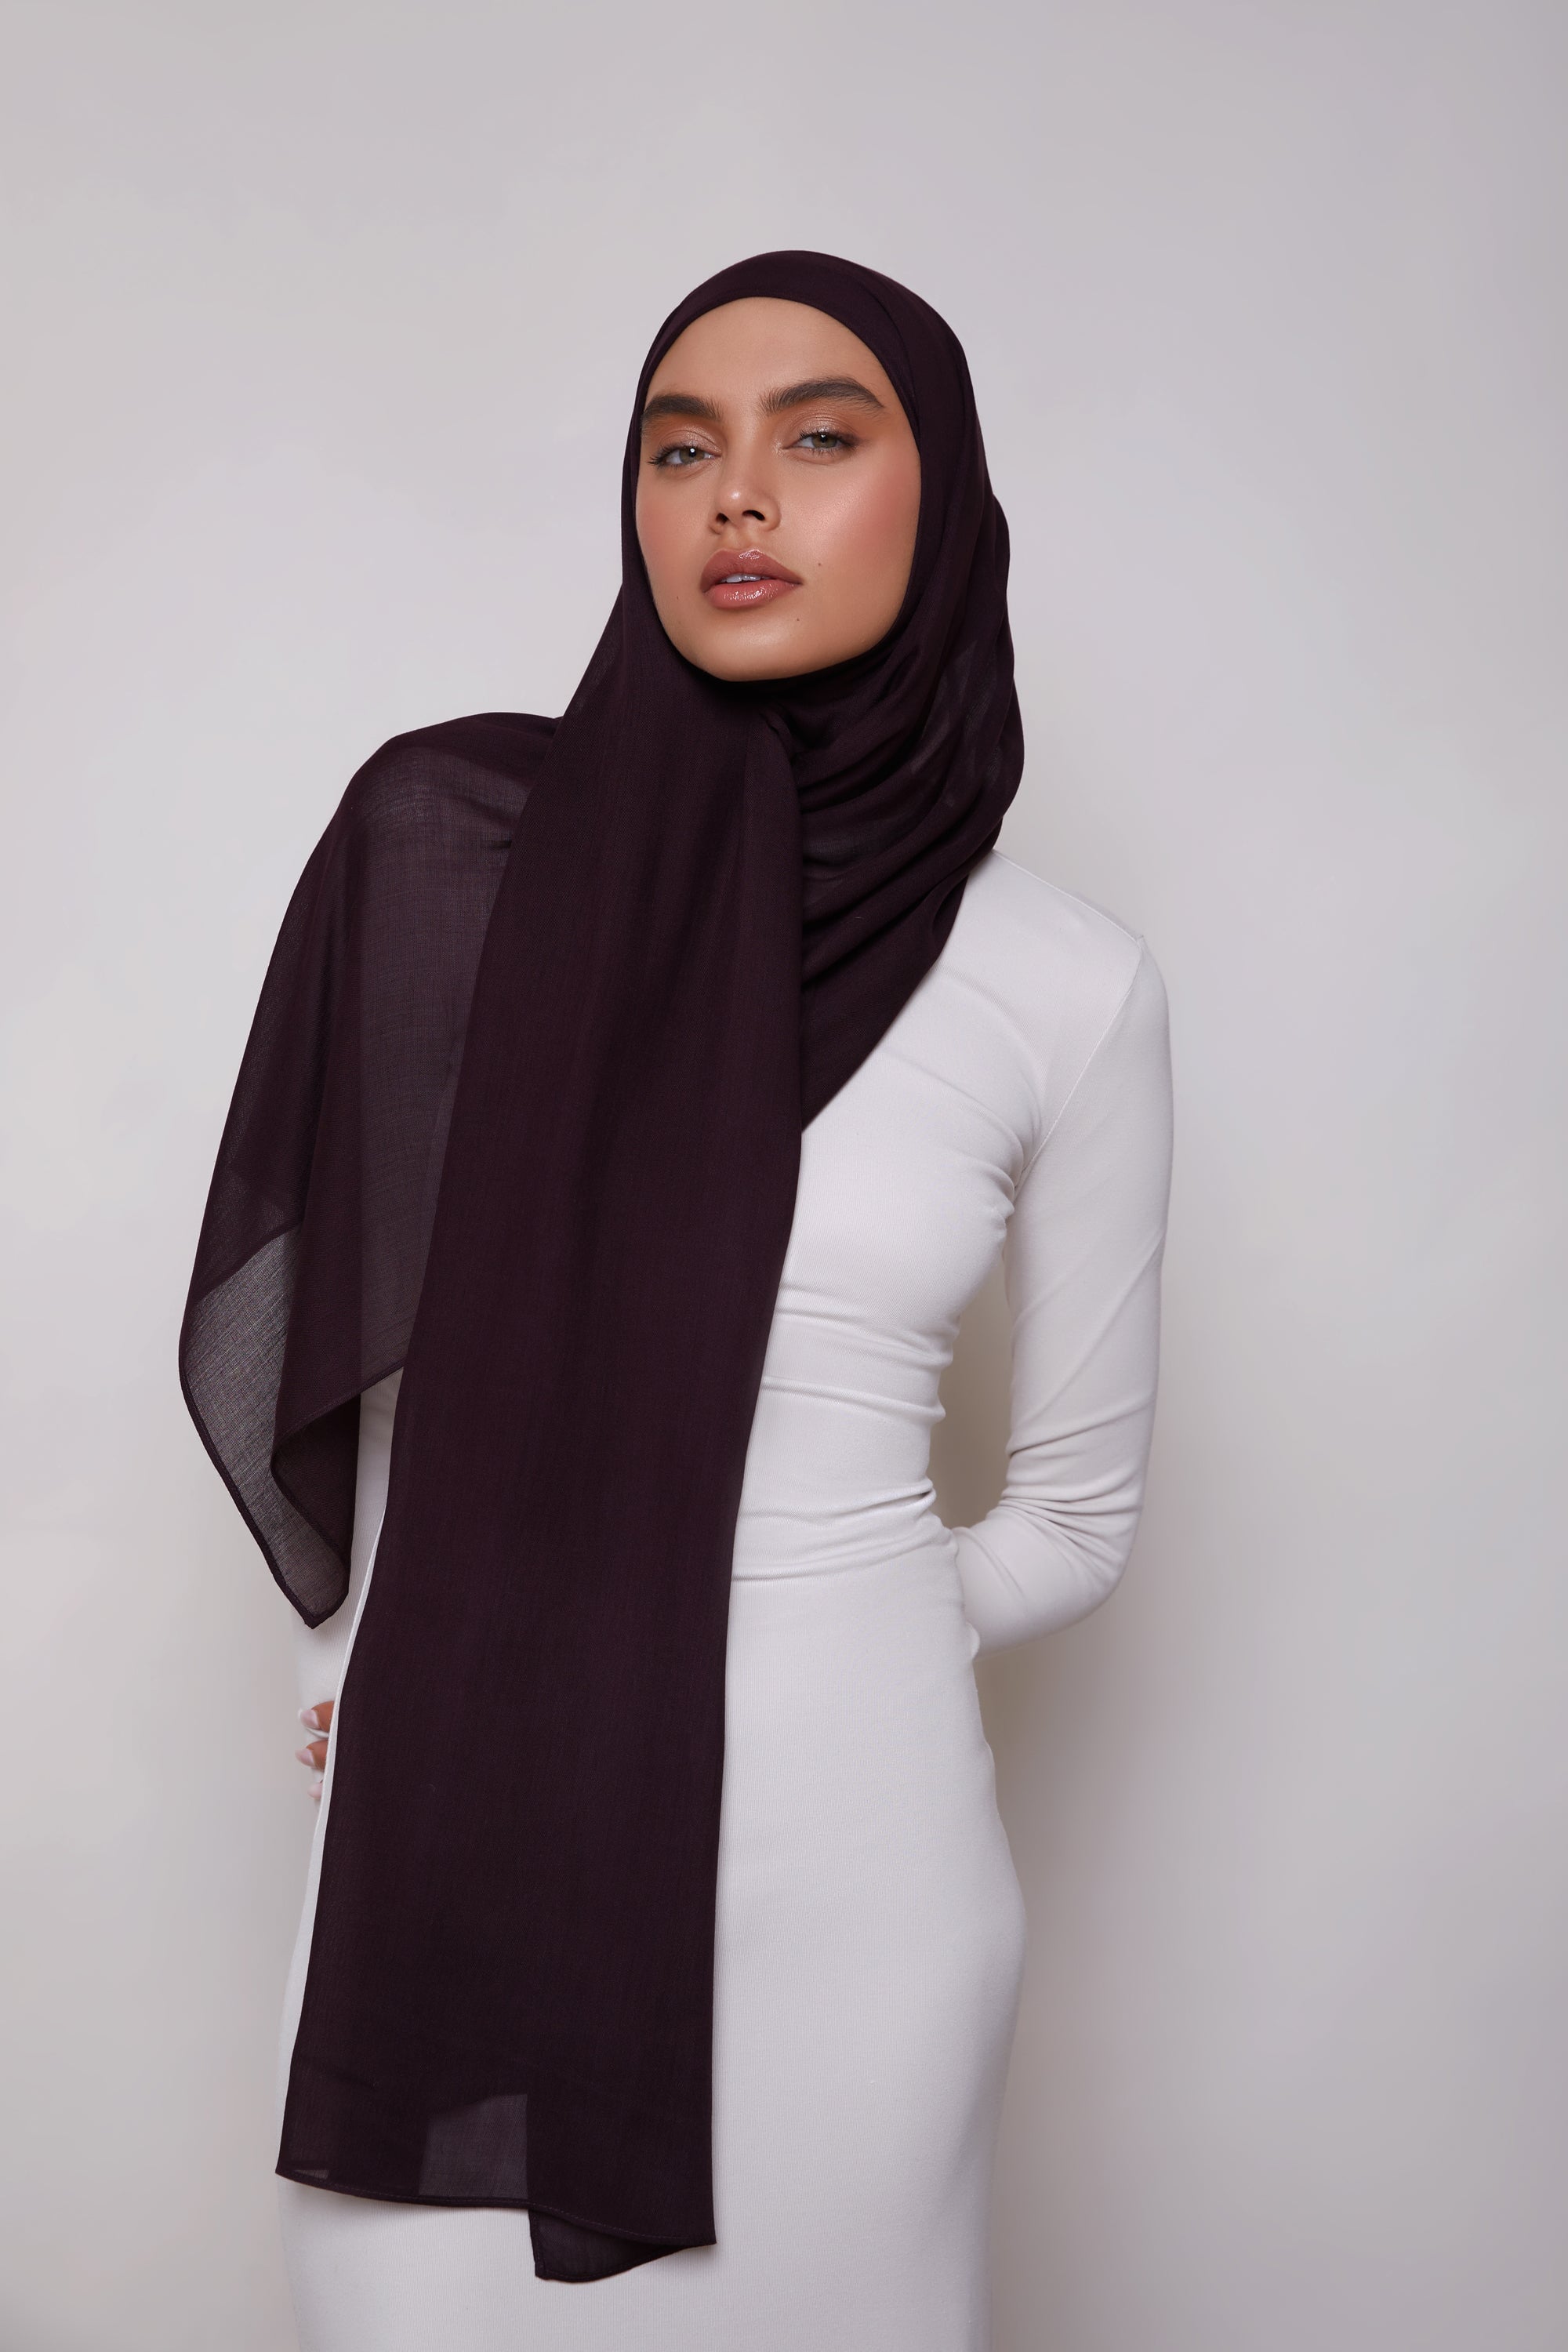 Modal Hijab - Chocolate Plum epschoolboard 